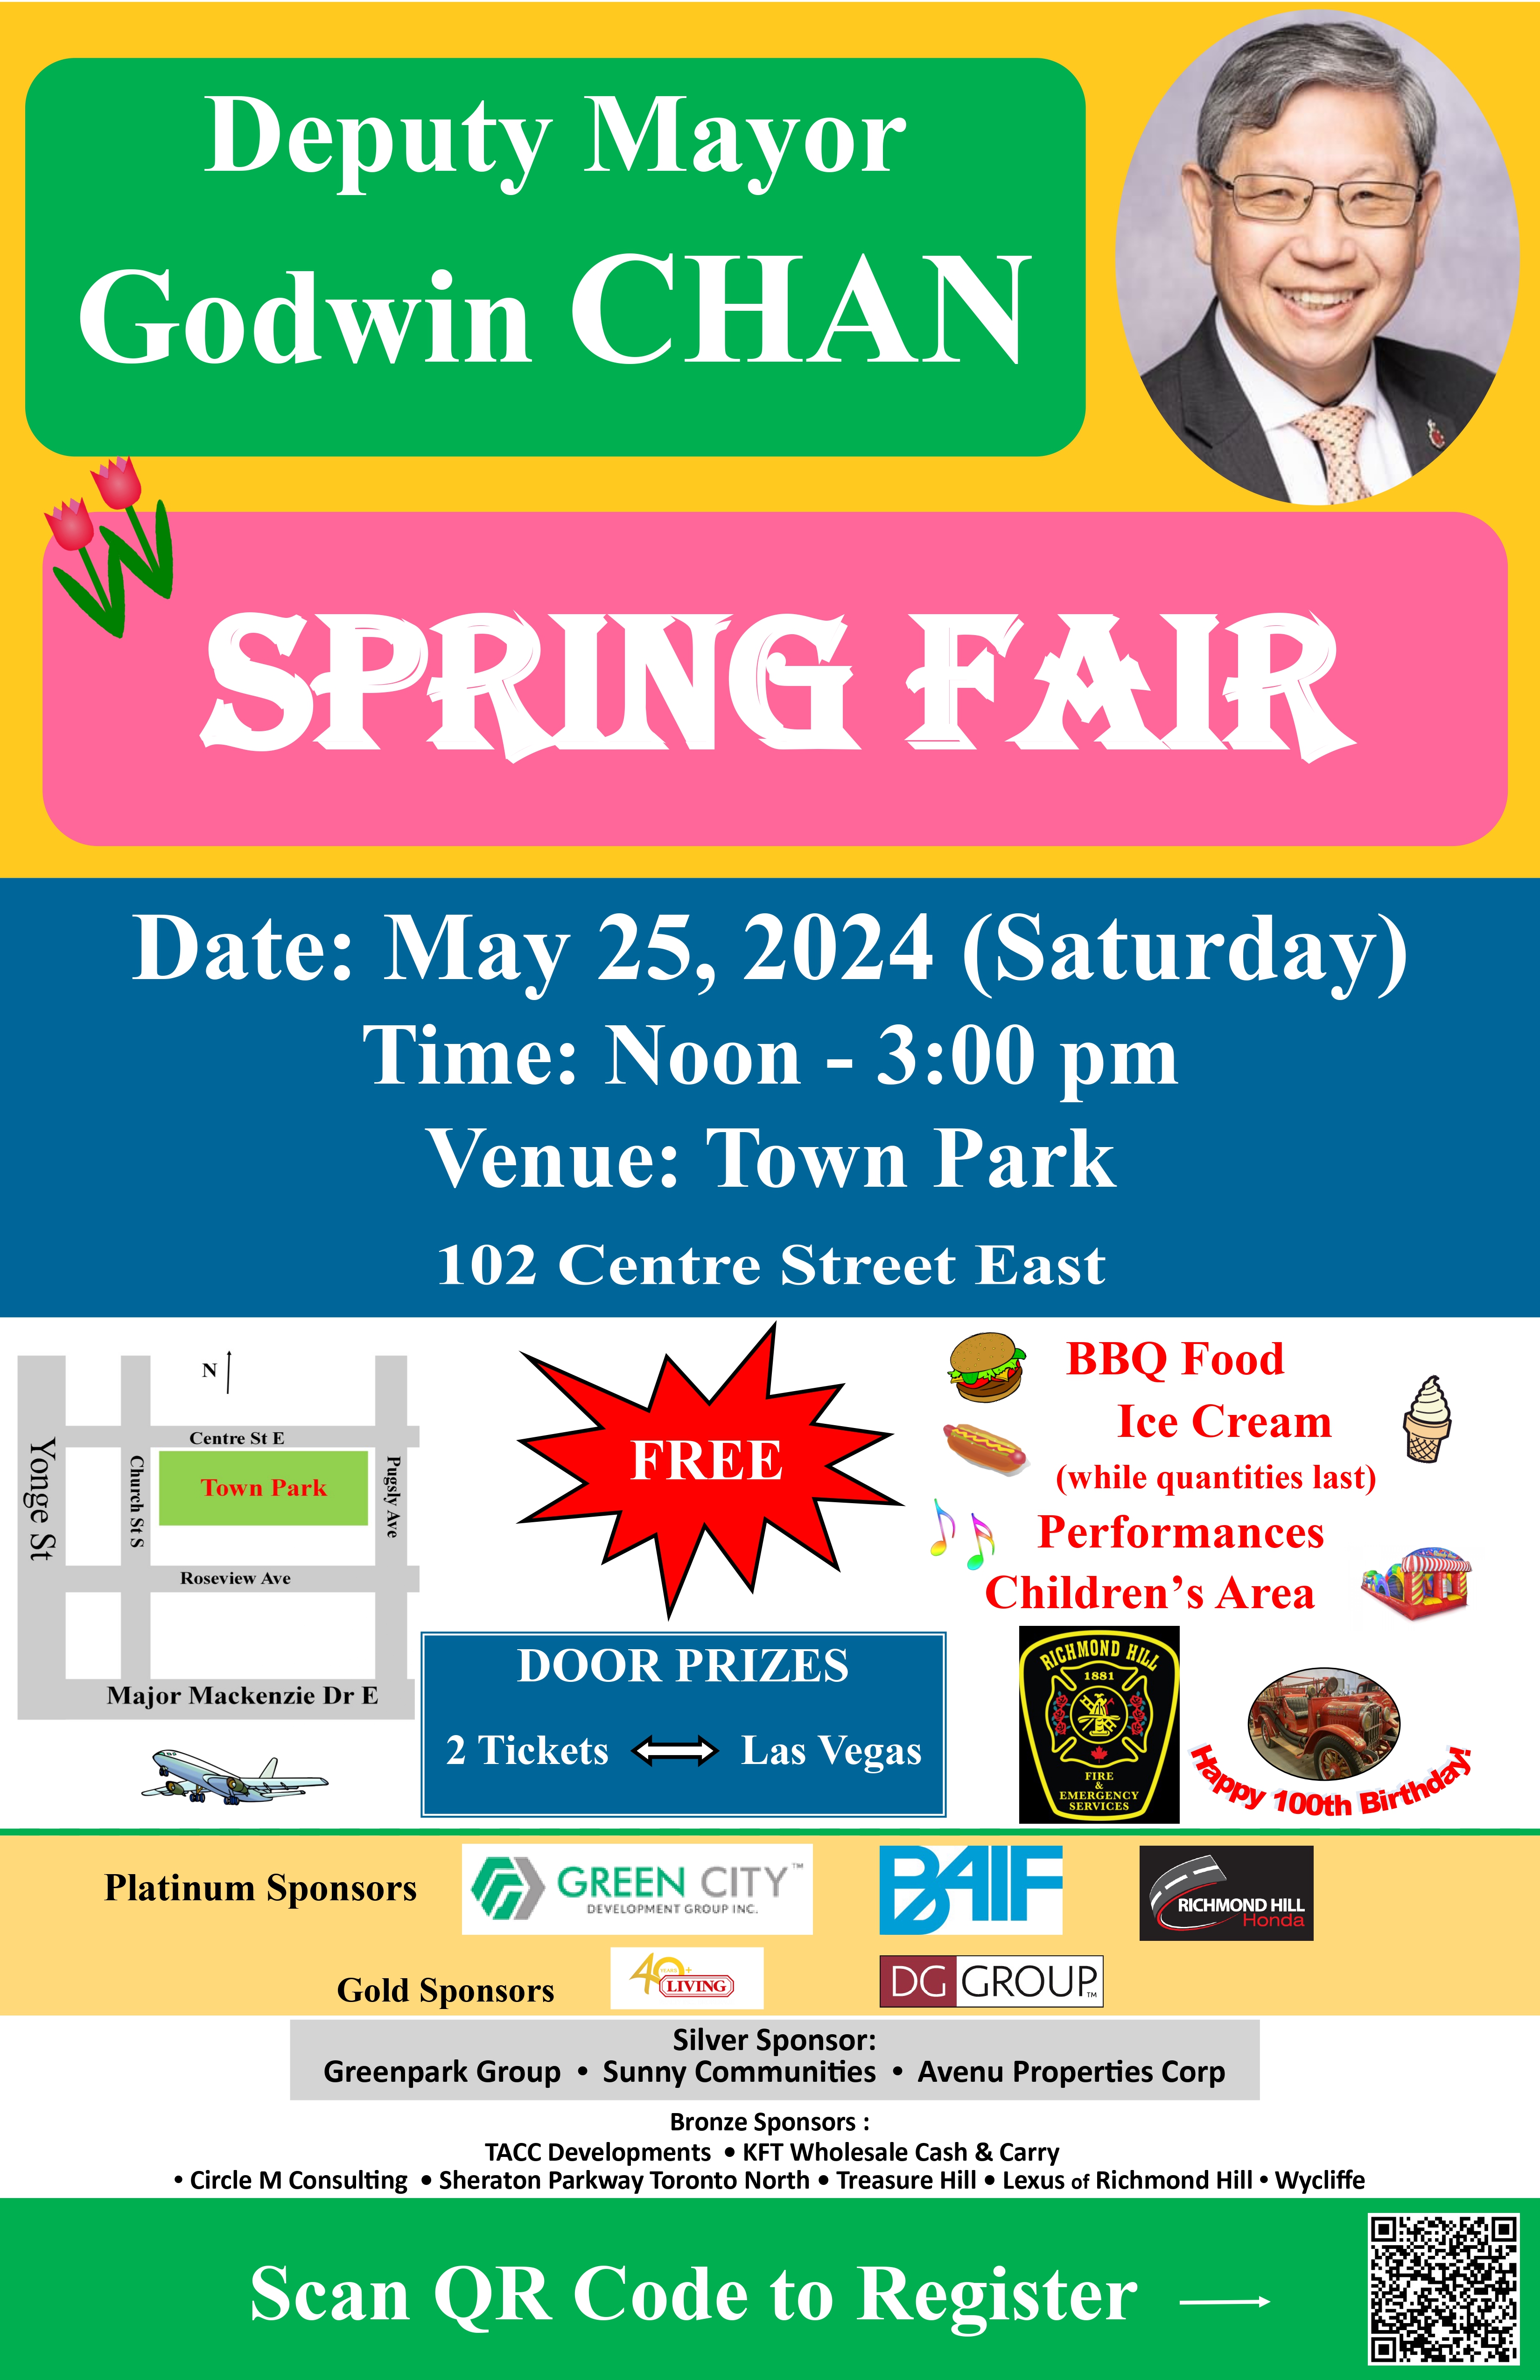 Spring Fair 2024 Godwin Chan Richmond Hill Venue Town Park 102 Centre Street East